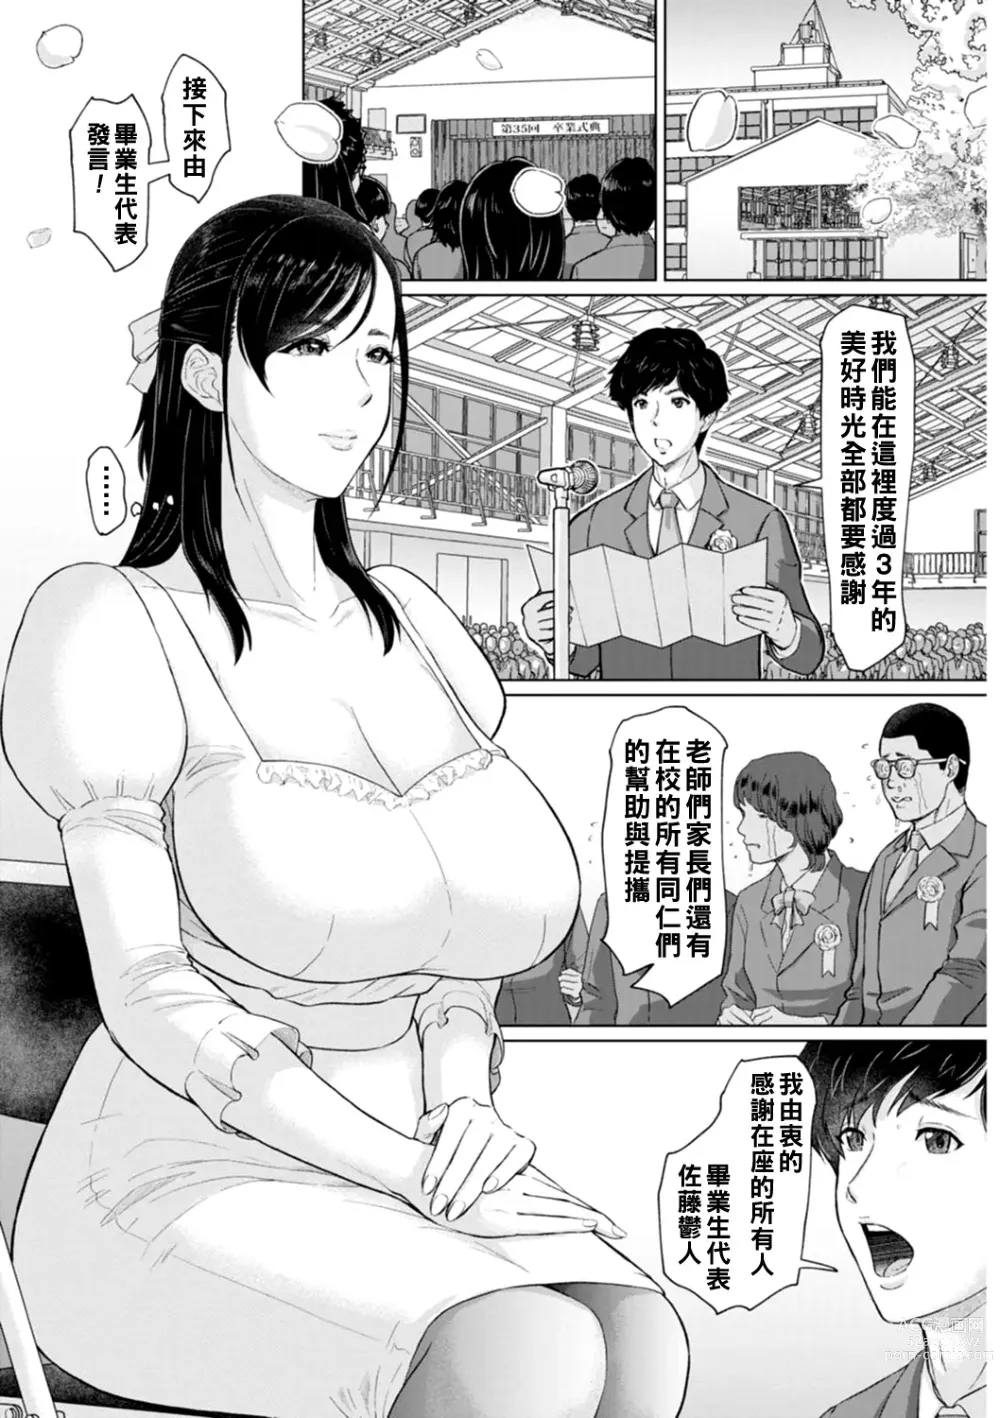 Page 5 of manga Onna Kyoushi no Seiai Shitou